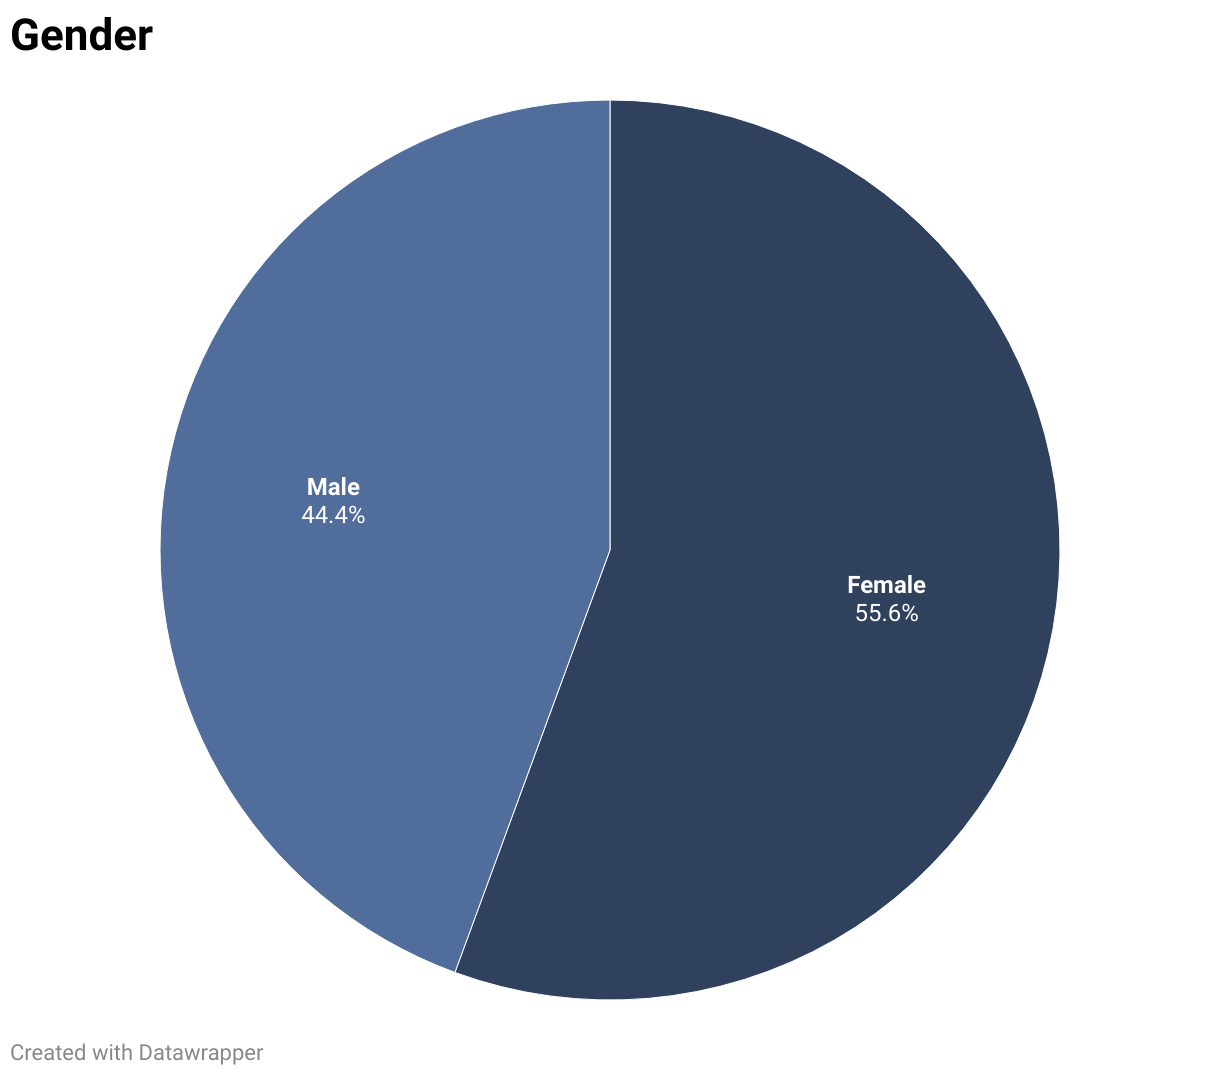 Female: 55.6%Male: 44.4%